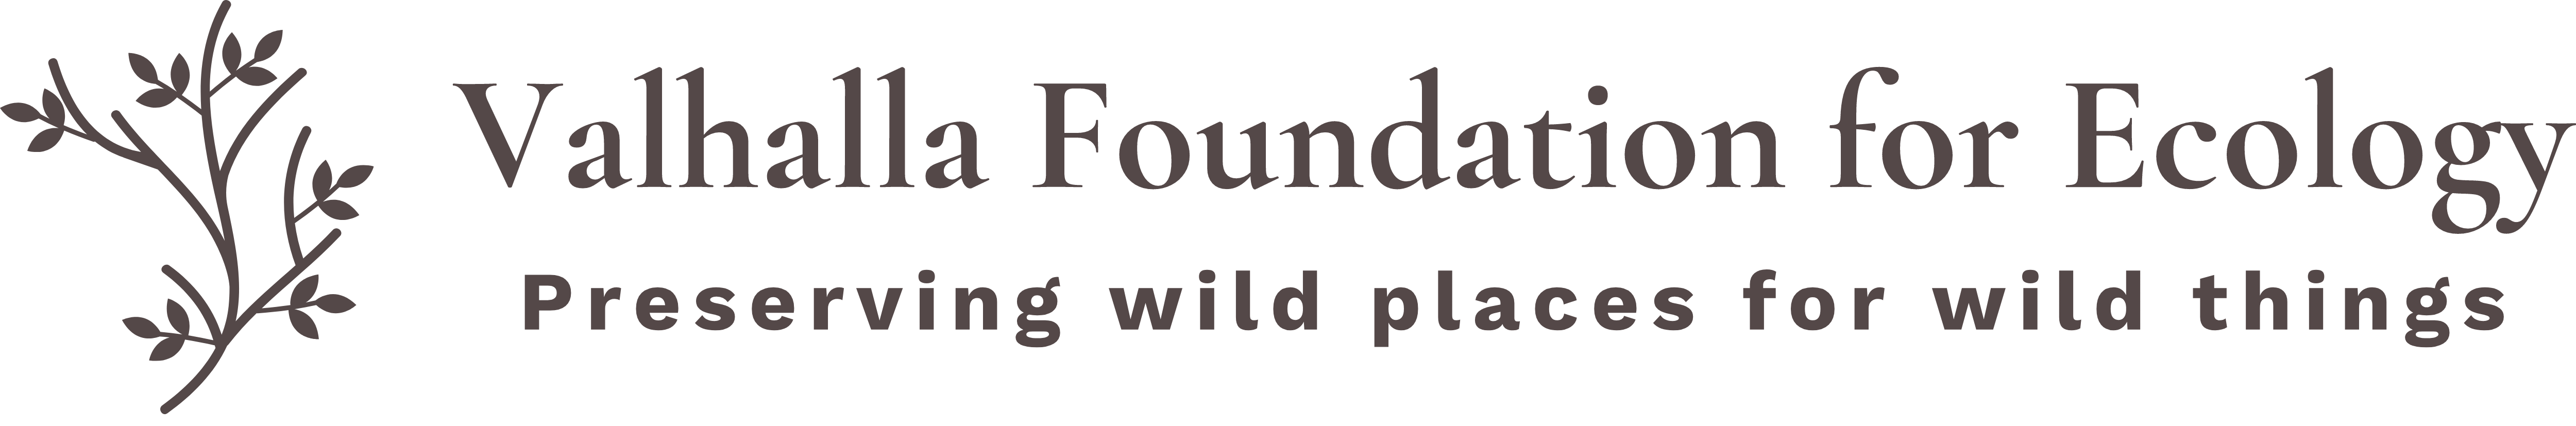 Valhalla Foundation for Ecology logo